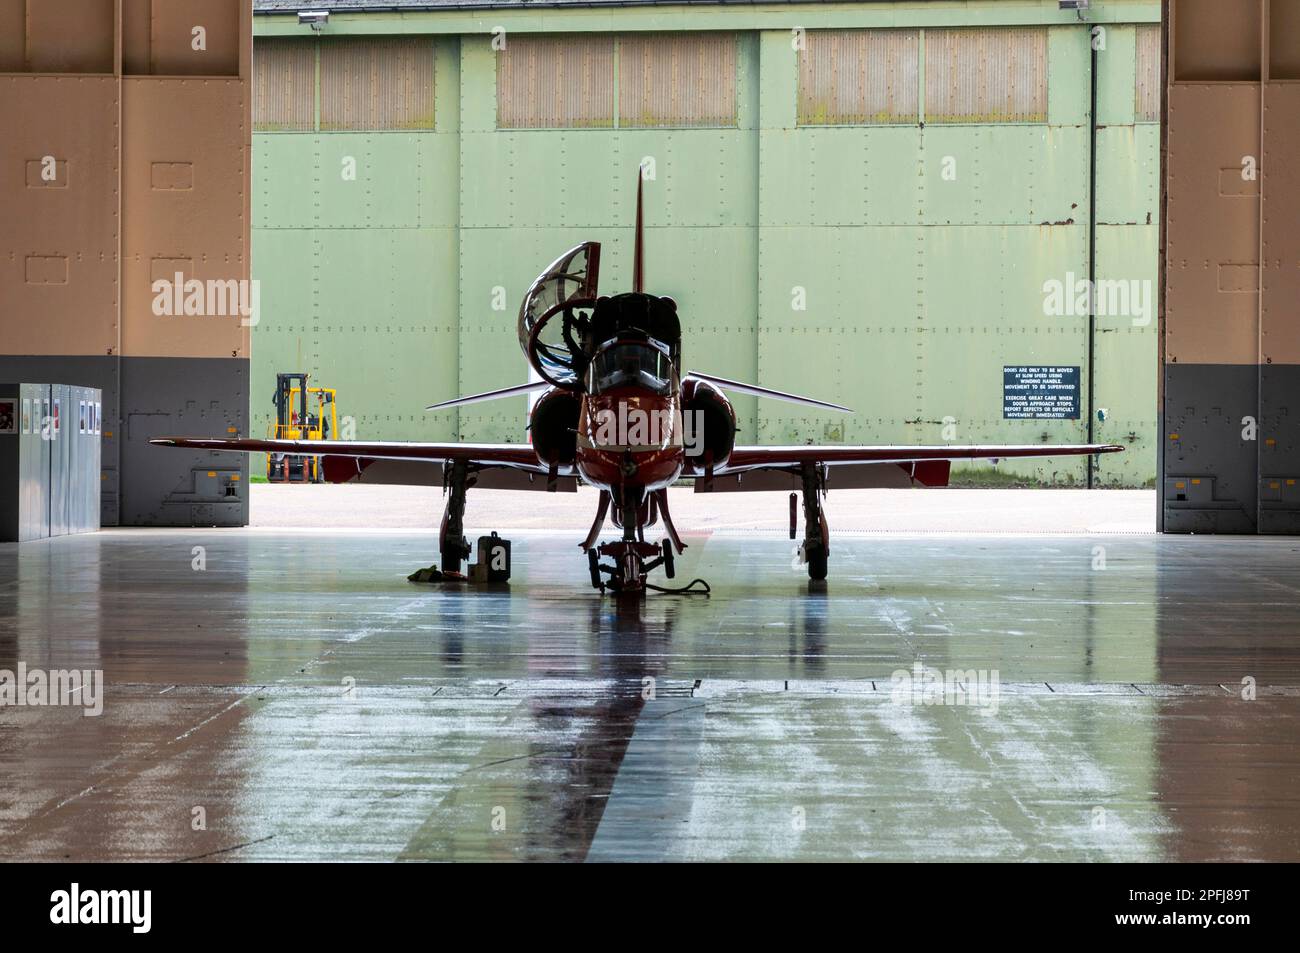 https://c8.alamy.com/comp/2PFJ89T/royal-air-force-red-arrows-display-team-bae-hawk-t1-jet-plane-in-a-hangar-at-raf-scampton-lincolnshire-uk-framed-by-hangar-doors-2PFJ89T.jpg